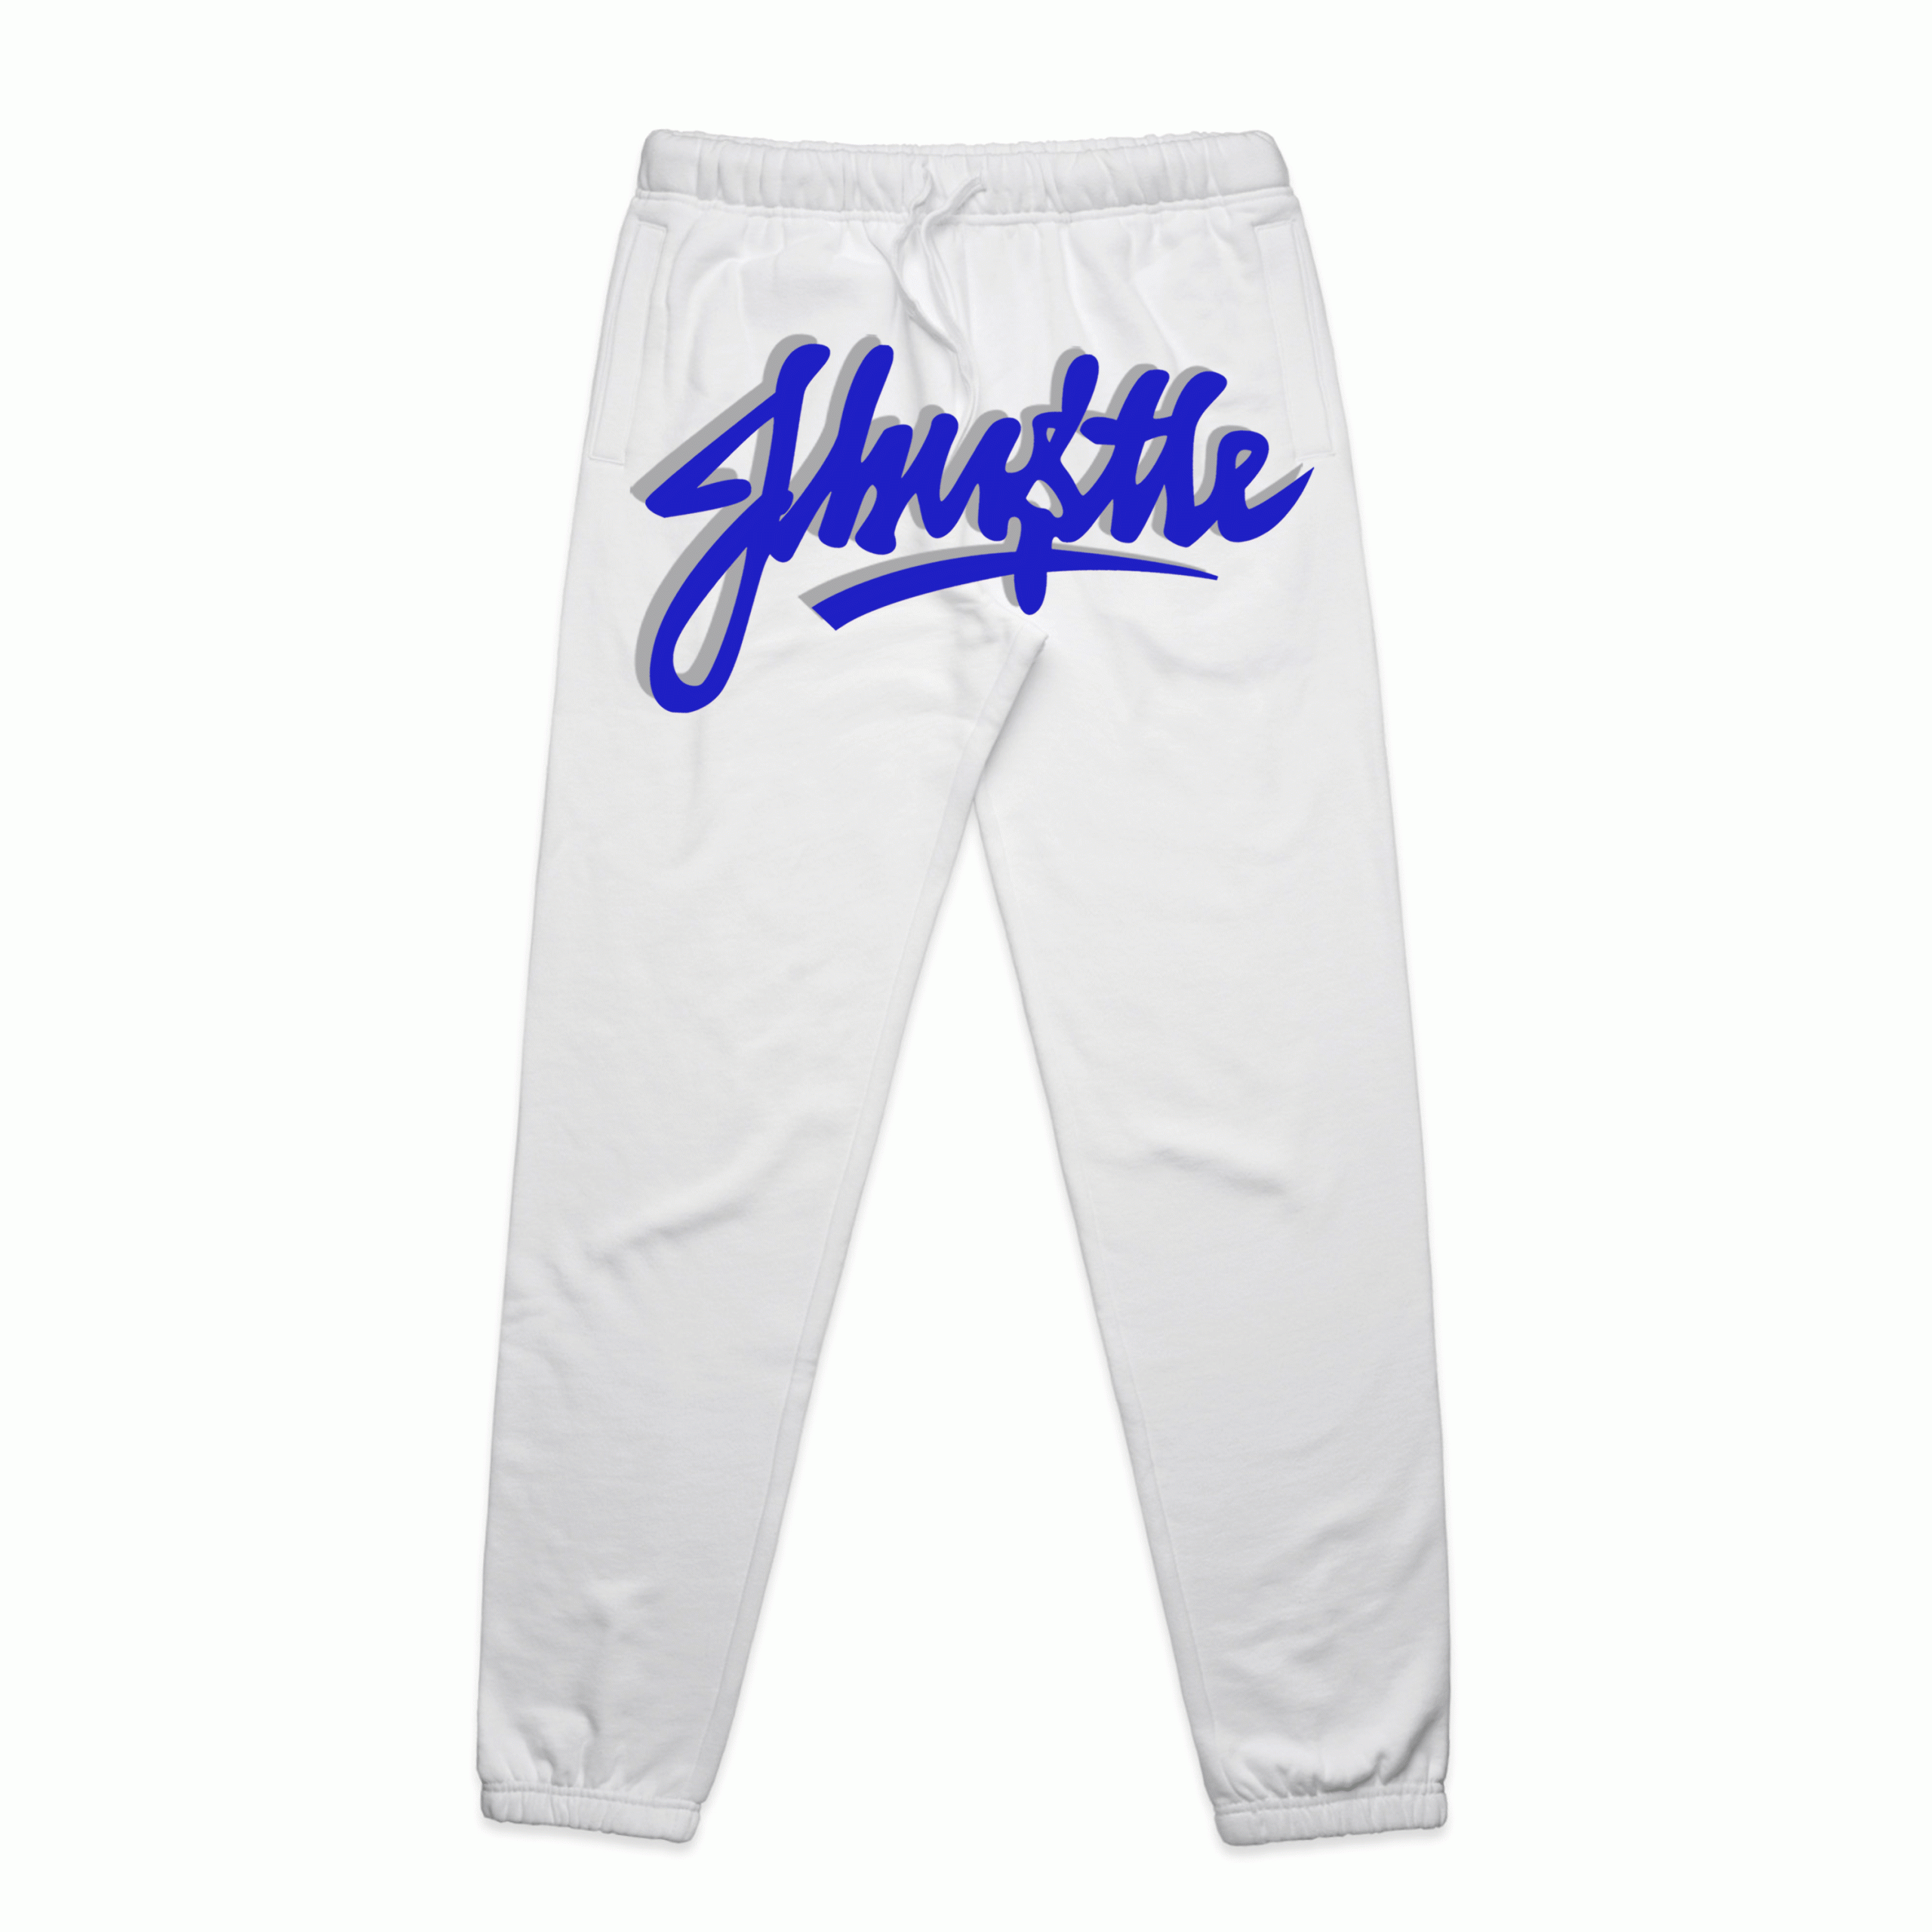 Graffiti Blue/Silver On White Trackpants - J-Hu$tle Merchandise